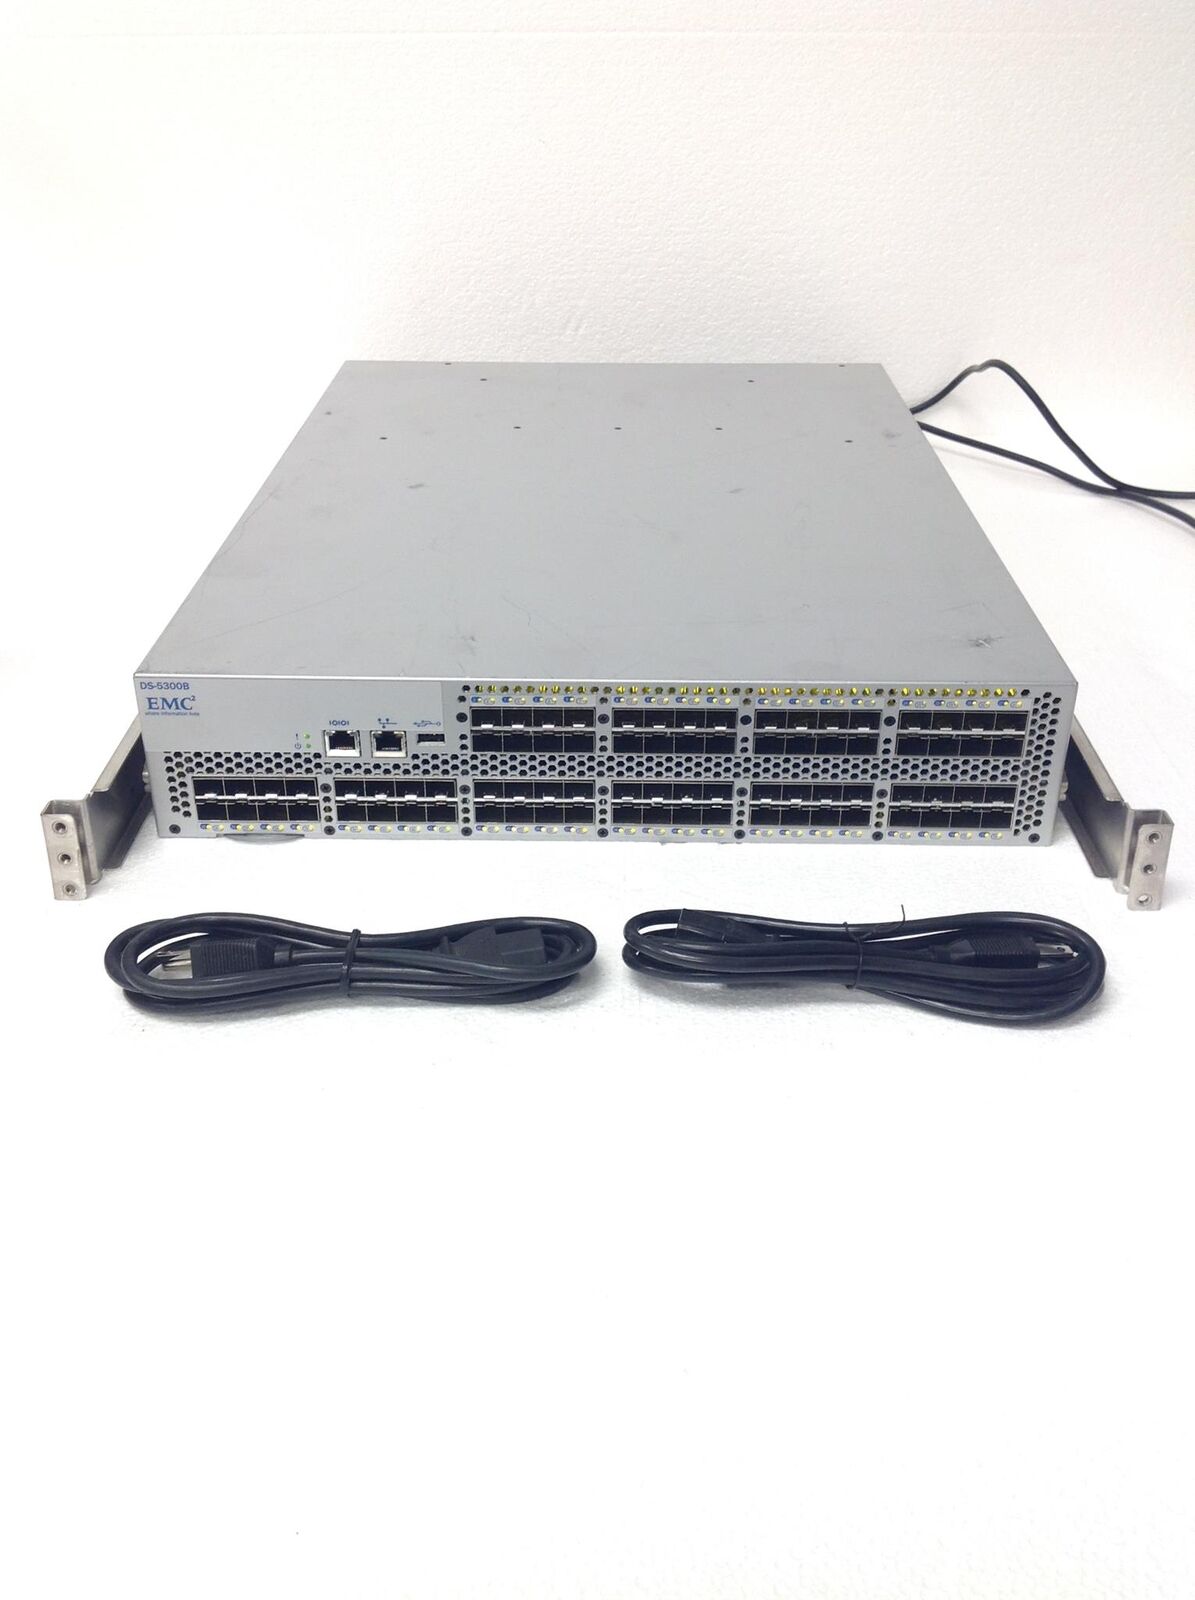 Brocade EMC 5300 / DS-5300B Fibre Channel SAN Switch 80x Ports w/ Rails Working